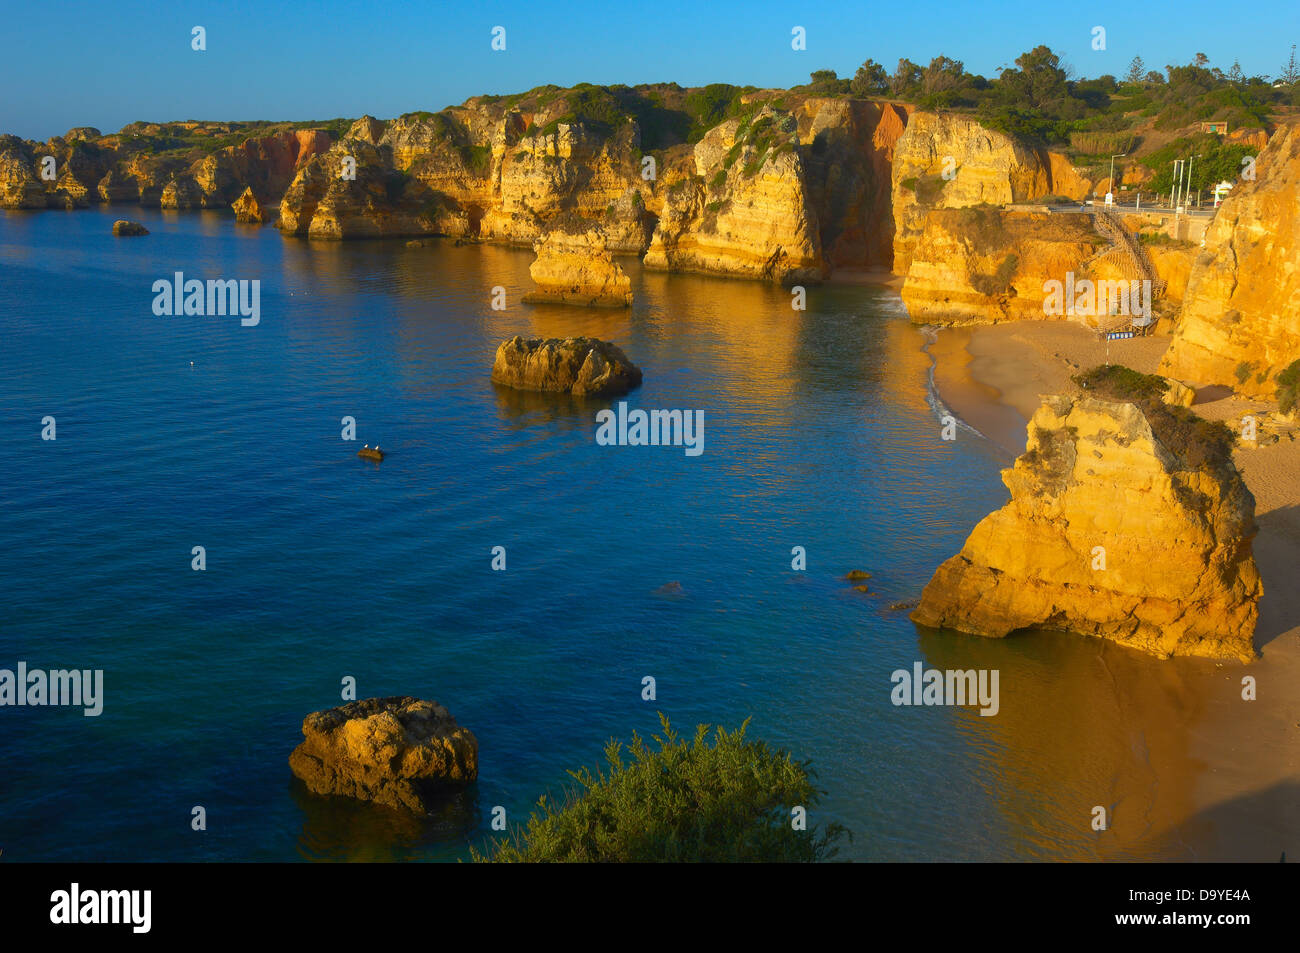 Lagos, Dona Ana Beach, Praia da Dona Ana, Algarve, Portugal, Europe Stock Photo